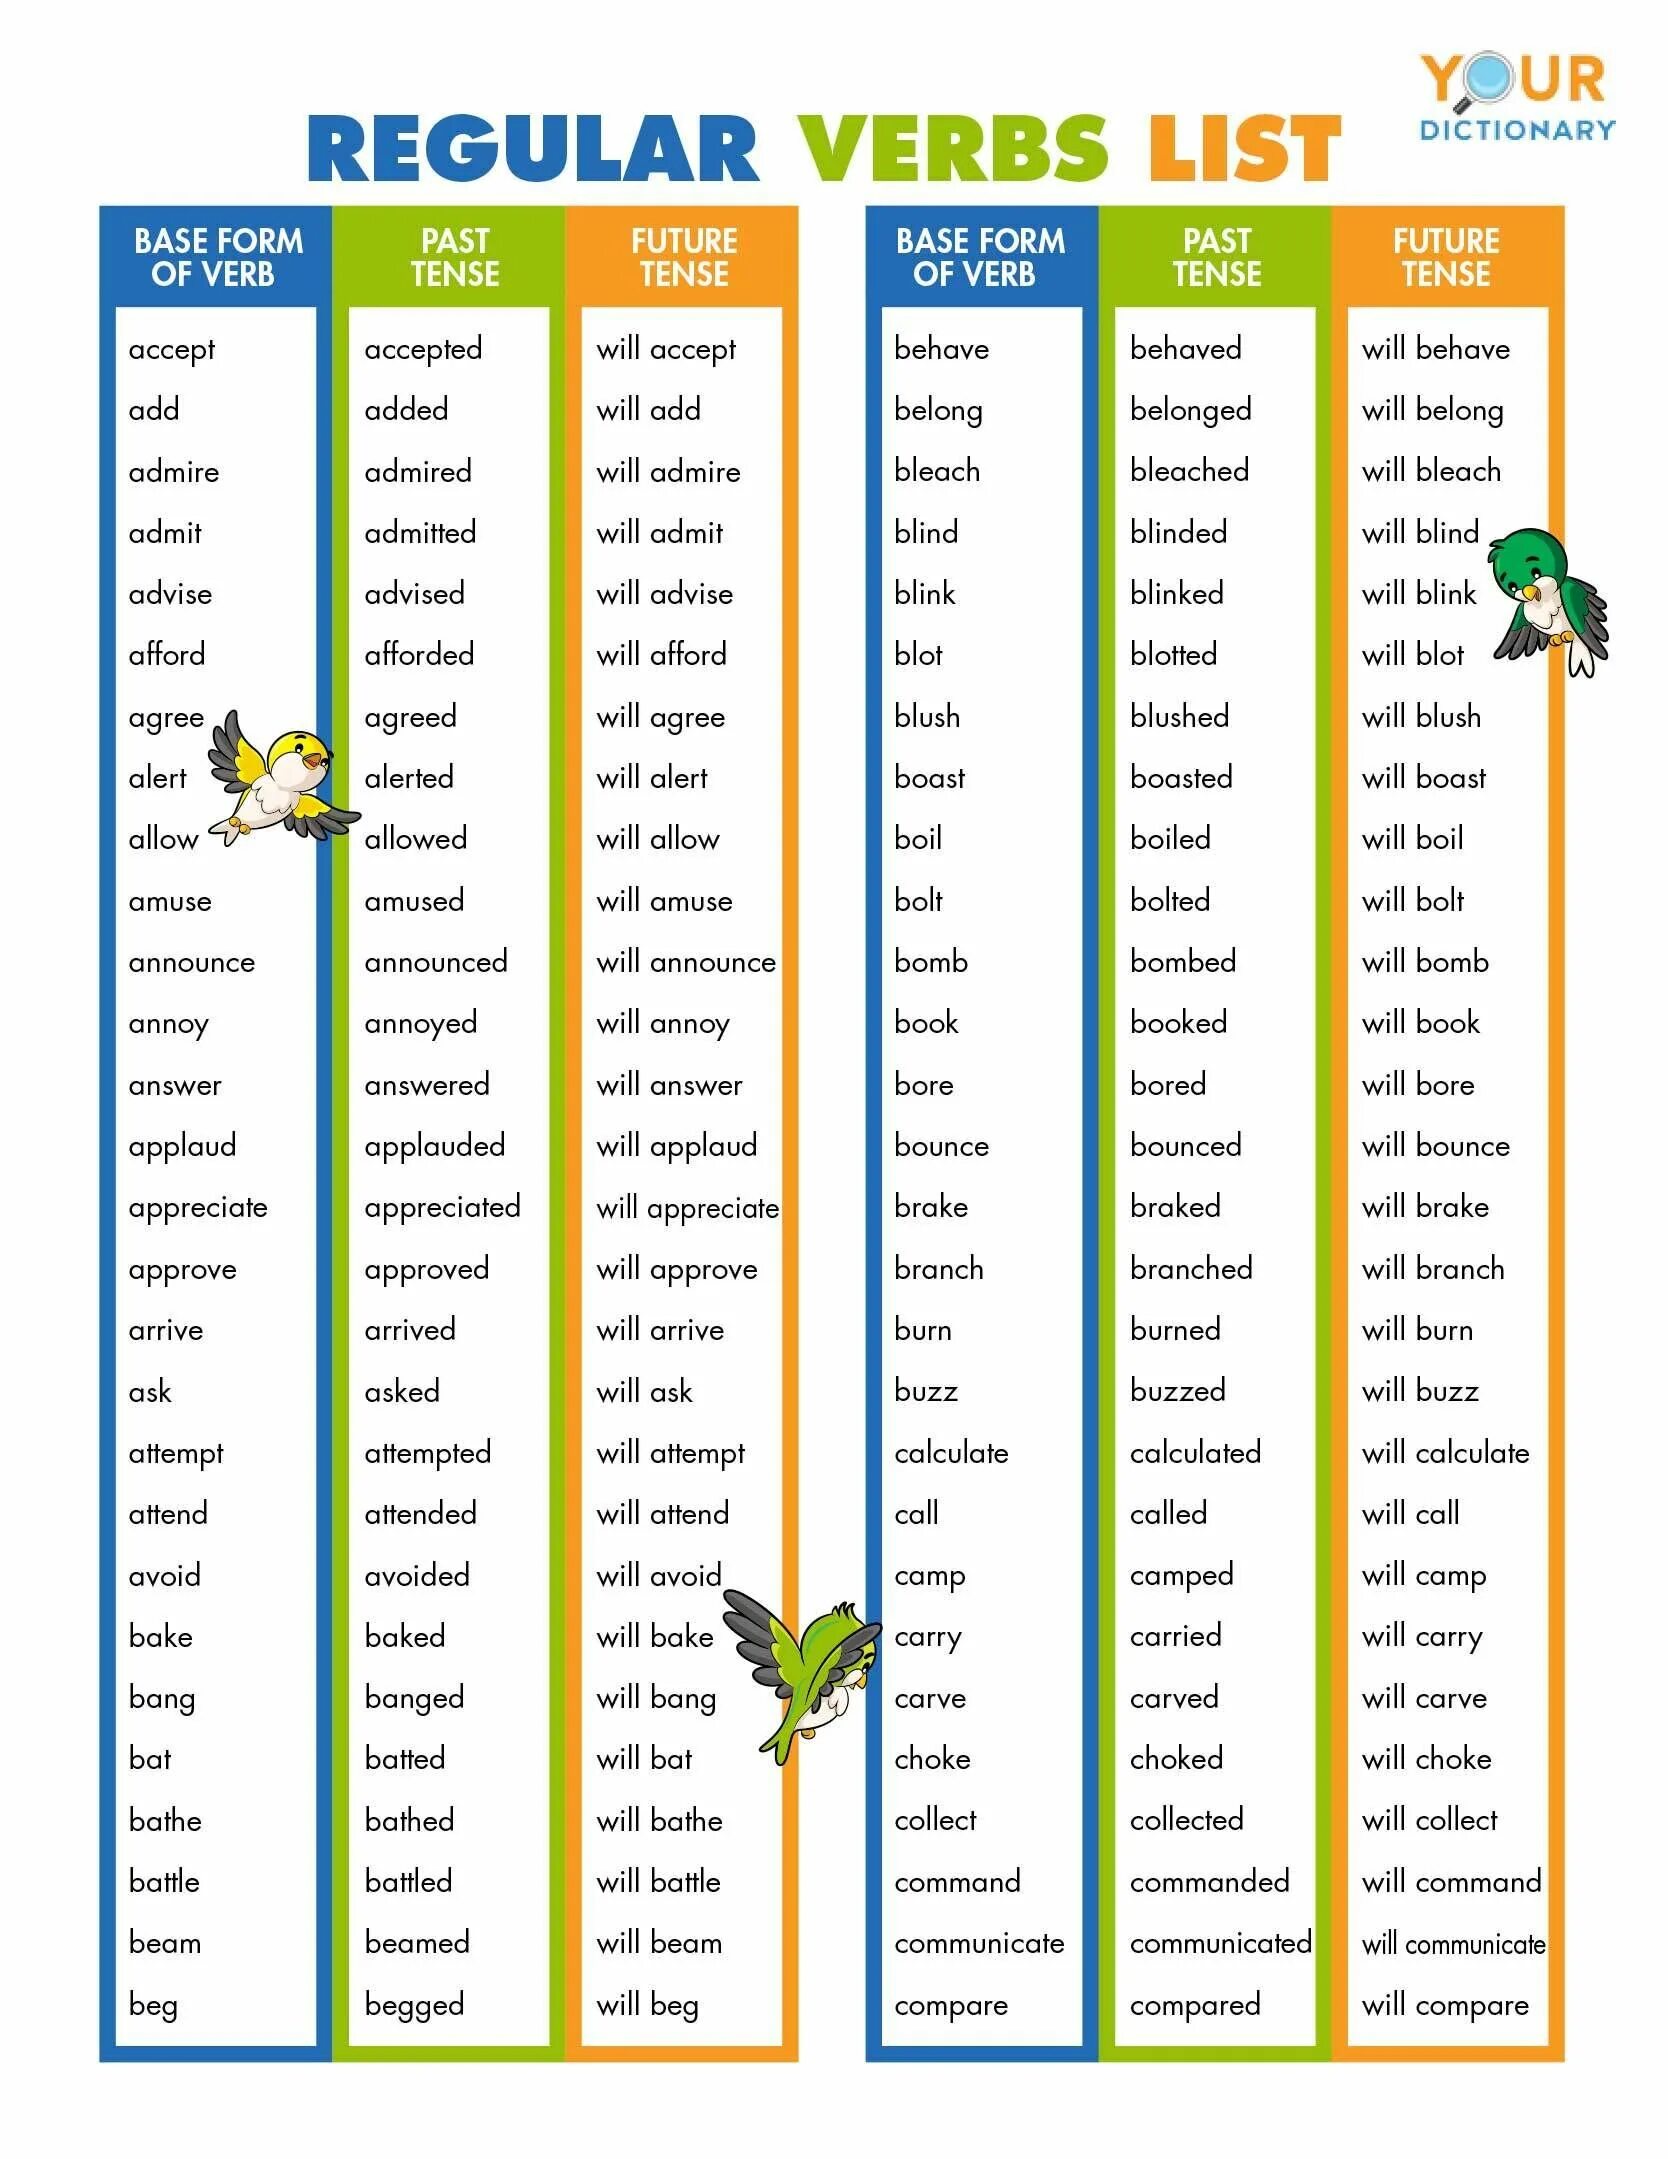 Second form verb. Past simple Irregular verbs list. Common Irregular verbs таблица. Regular verbs Irregular verbs таблица. Regular verbs список.